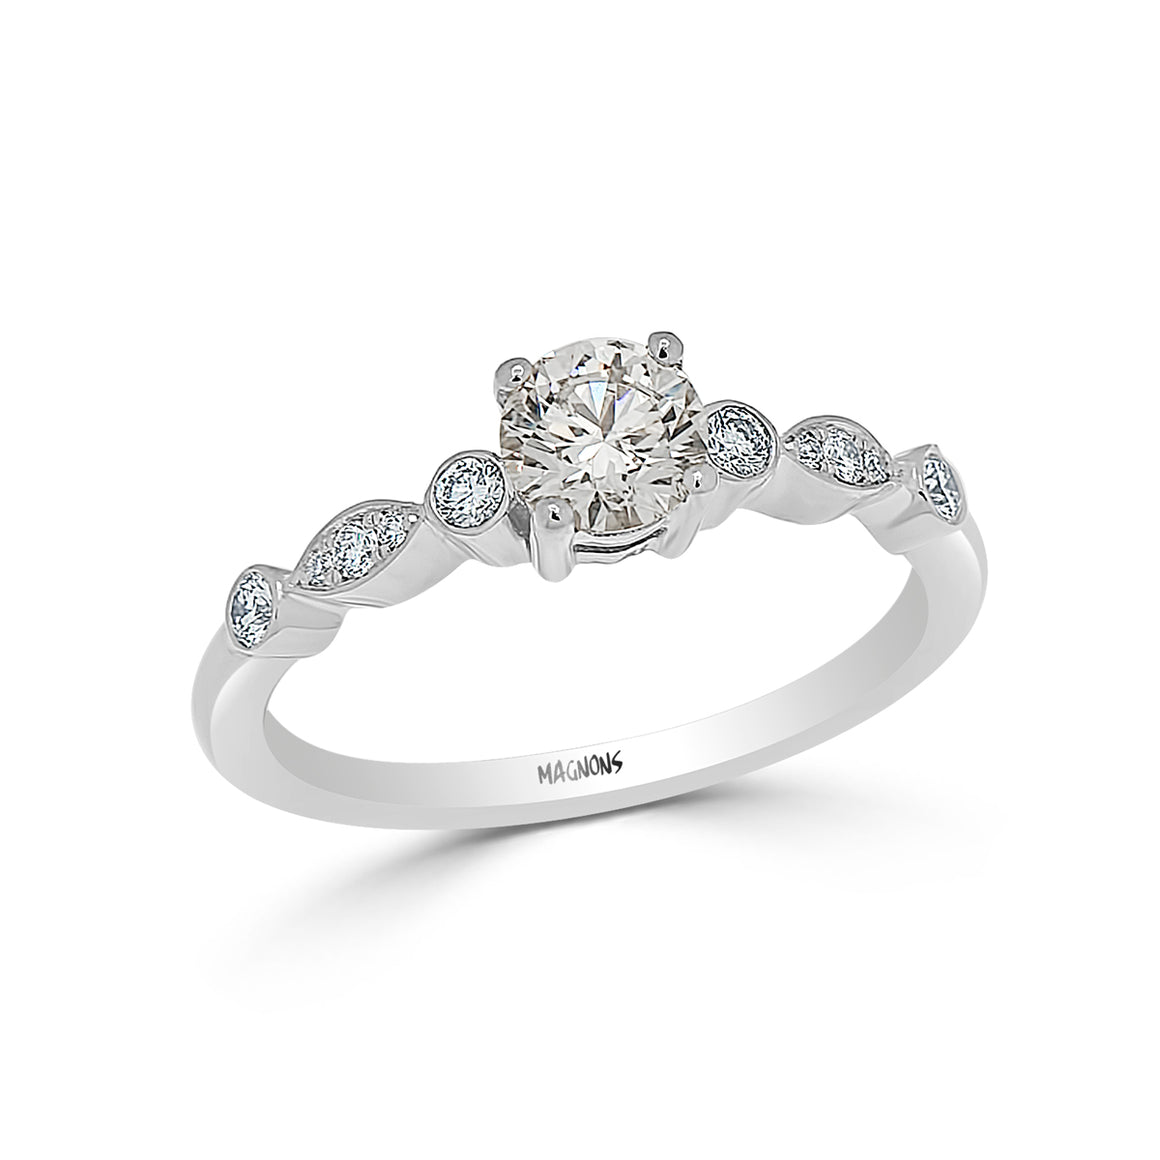 0.50CT Canadian Diamond Engagement Ring Yellow gold 18K Diamond Engagement Bridal Ring